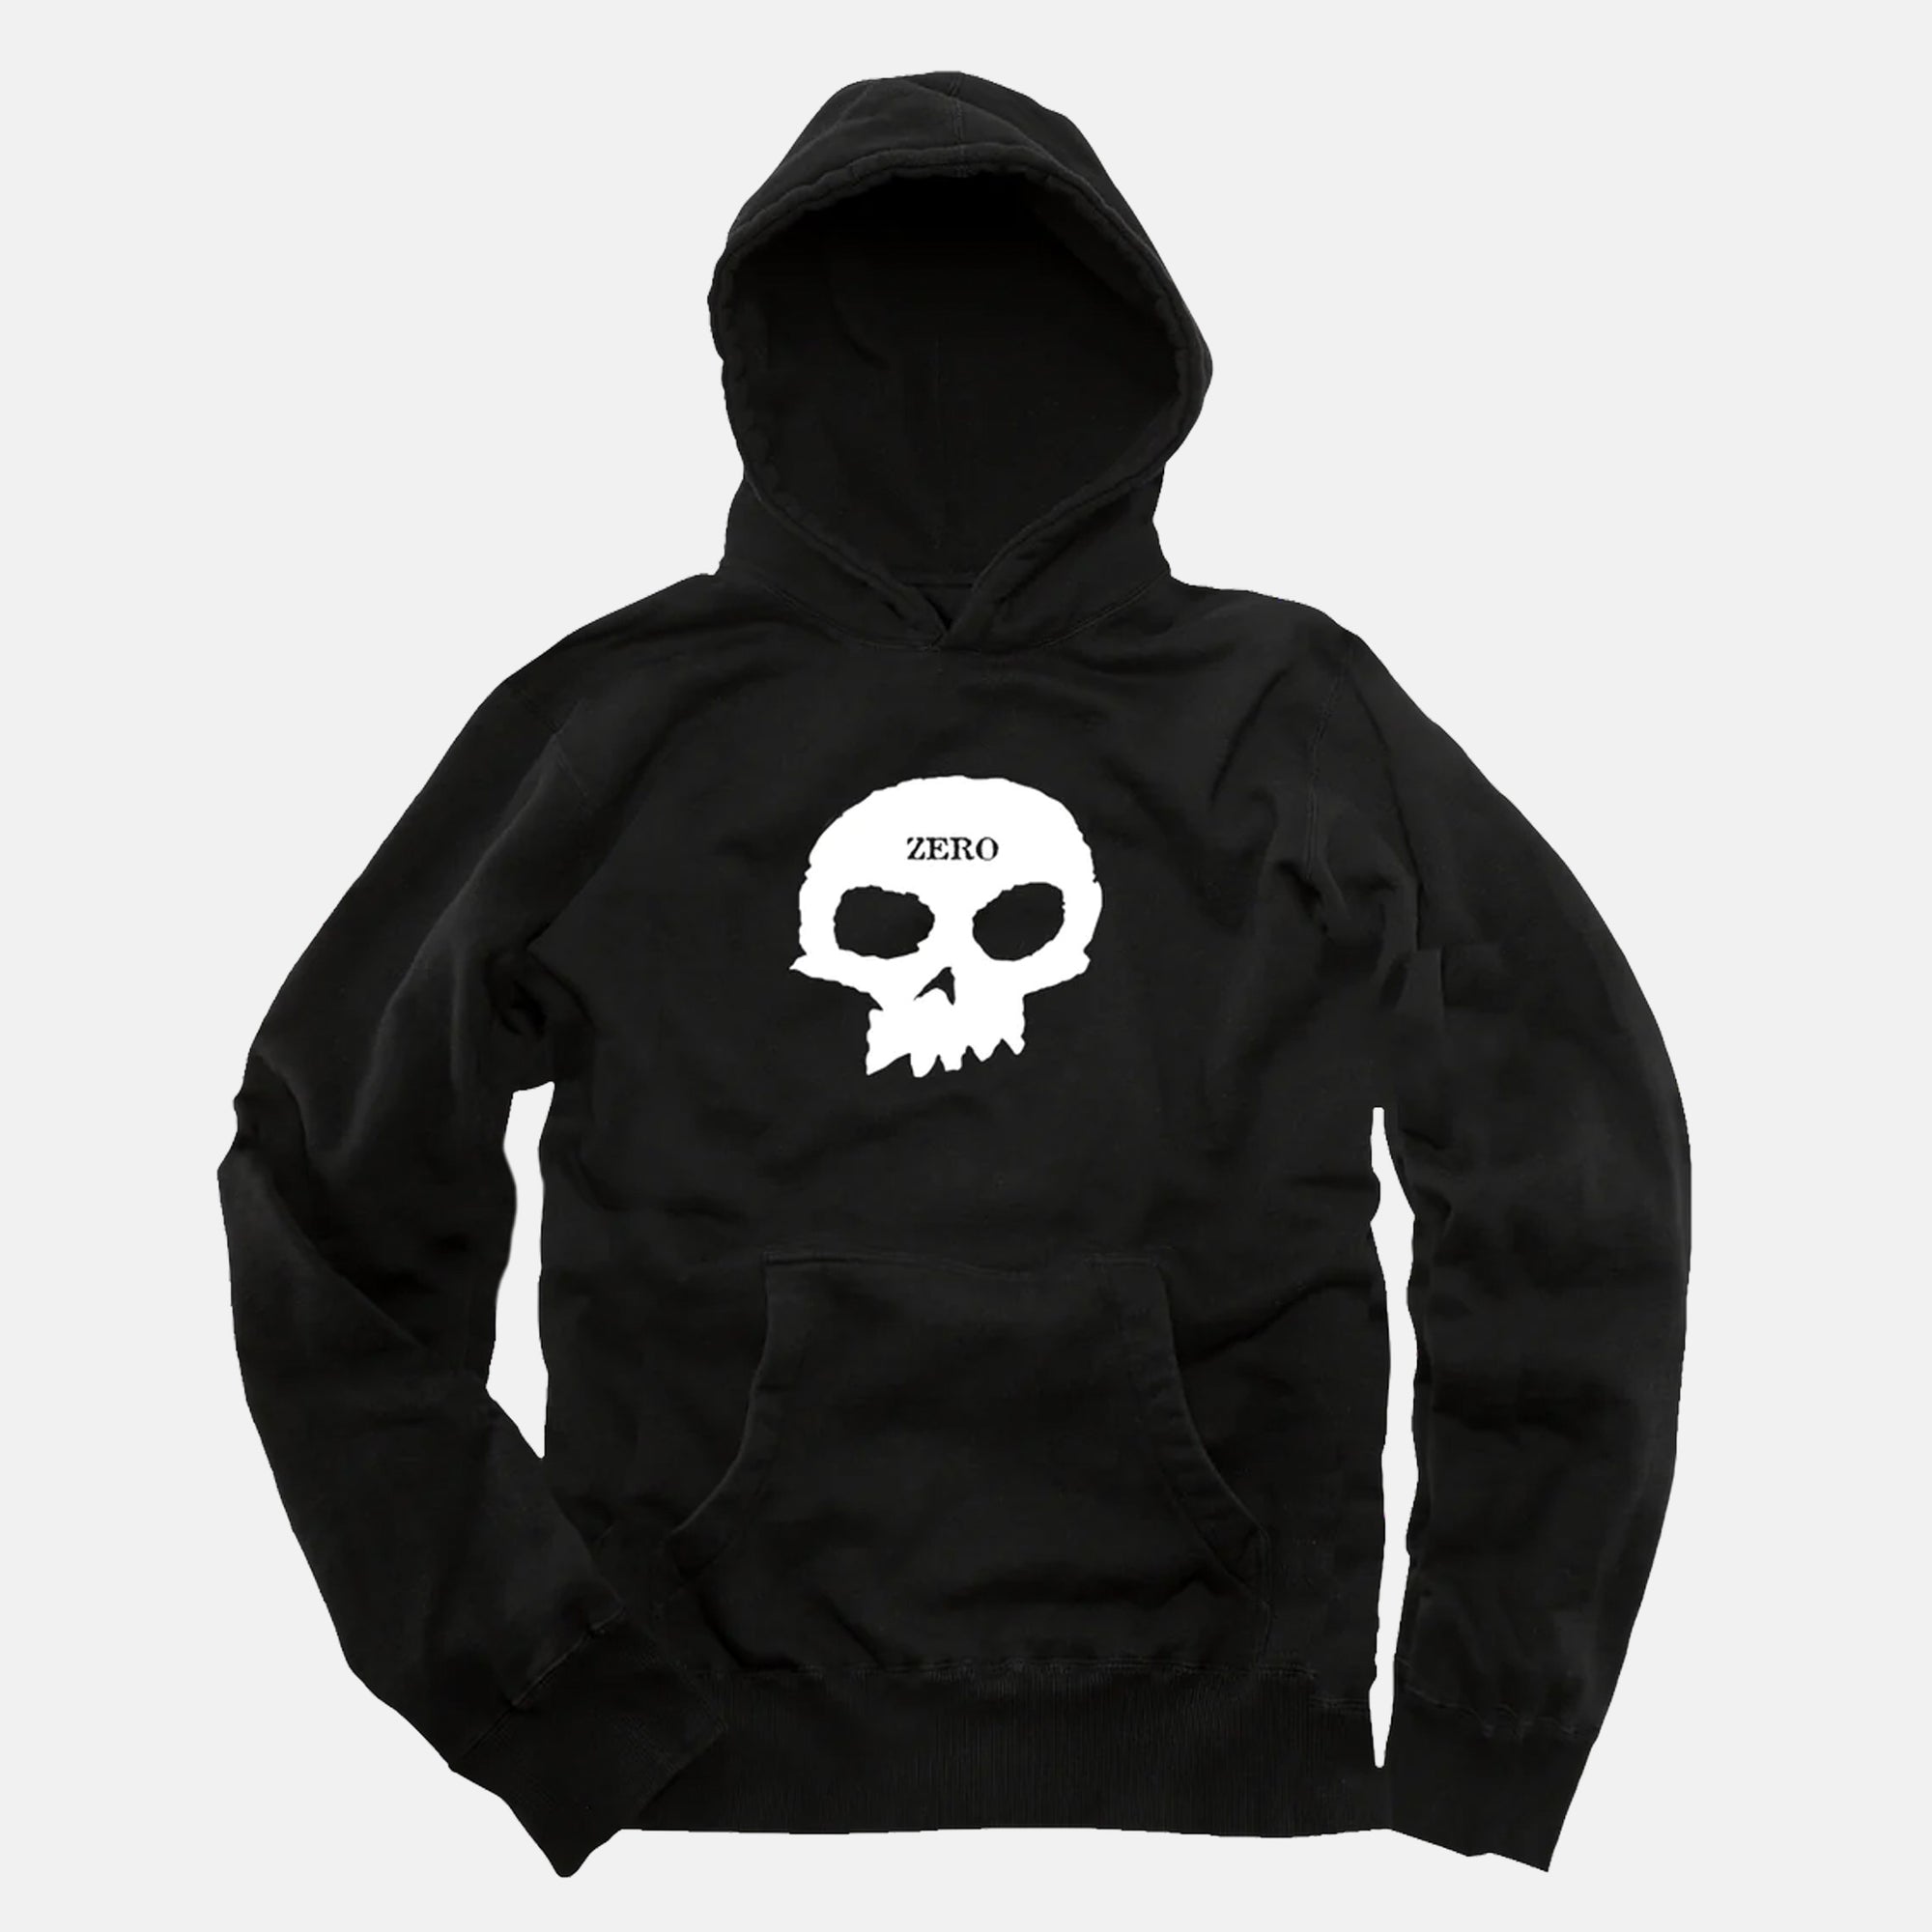 Zero Skateboards - Single Skull Pullover Hooded Sweatshirt - Black